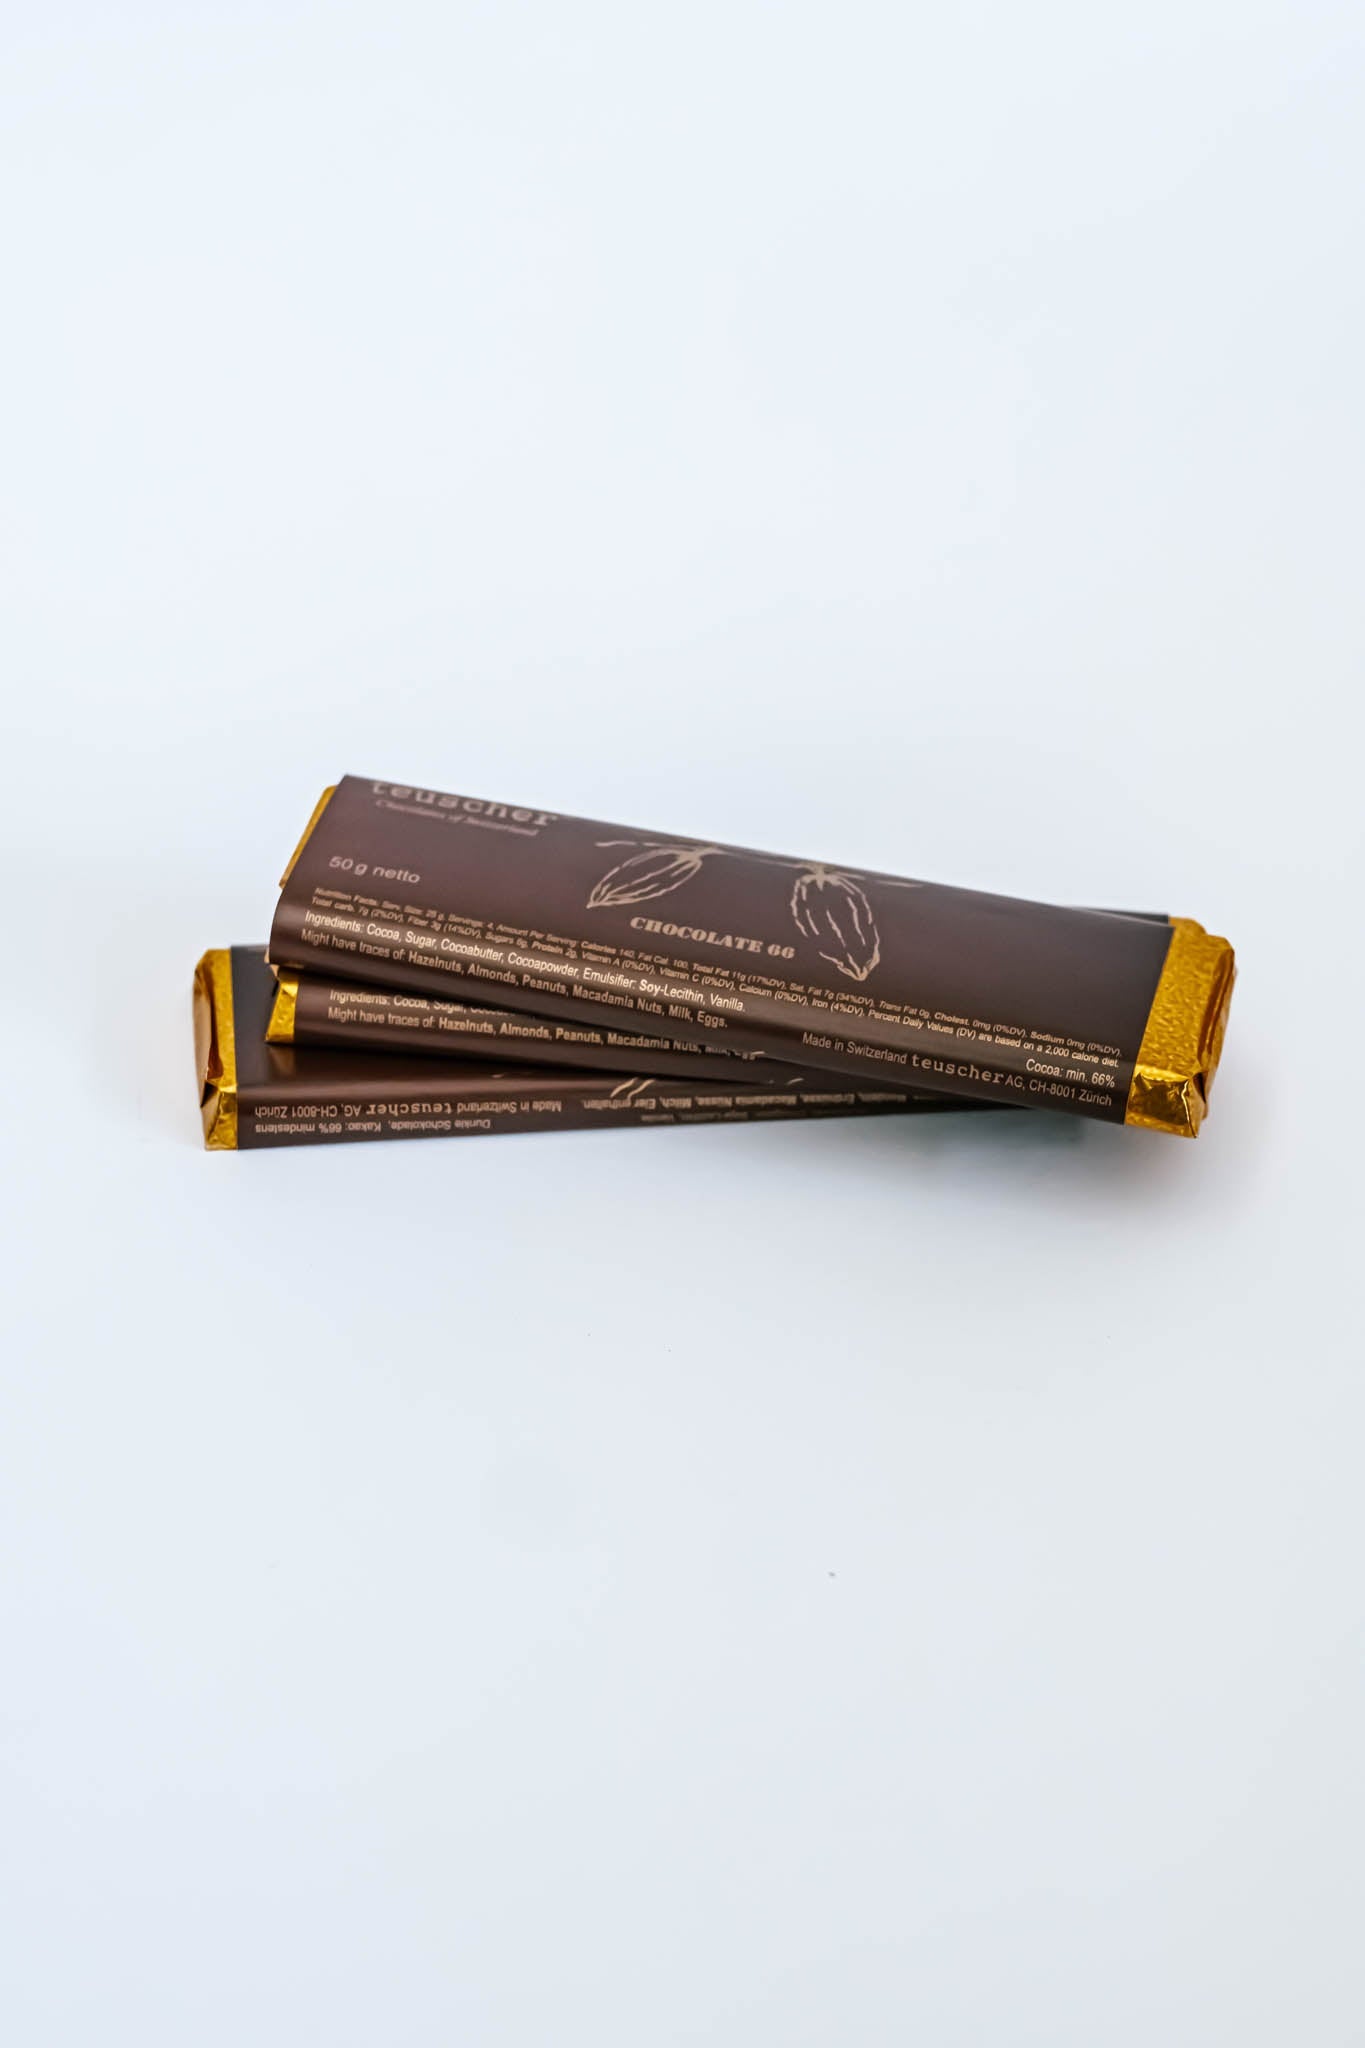 50 grams Chocolate Bars